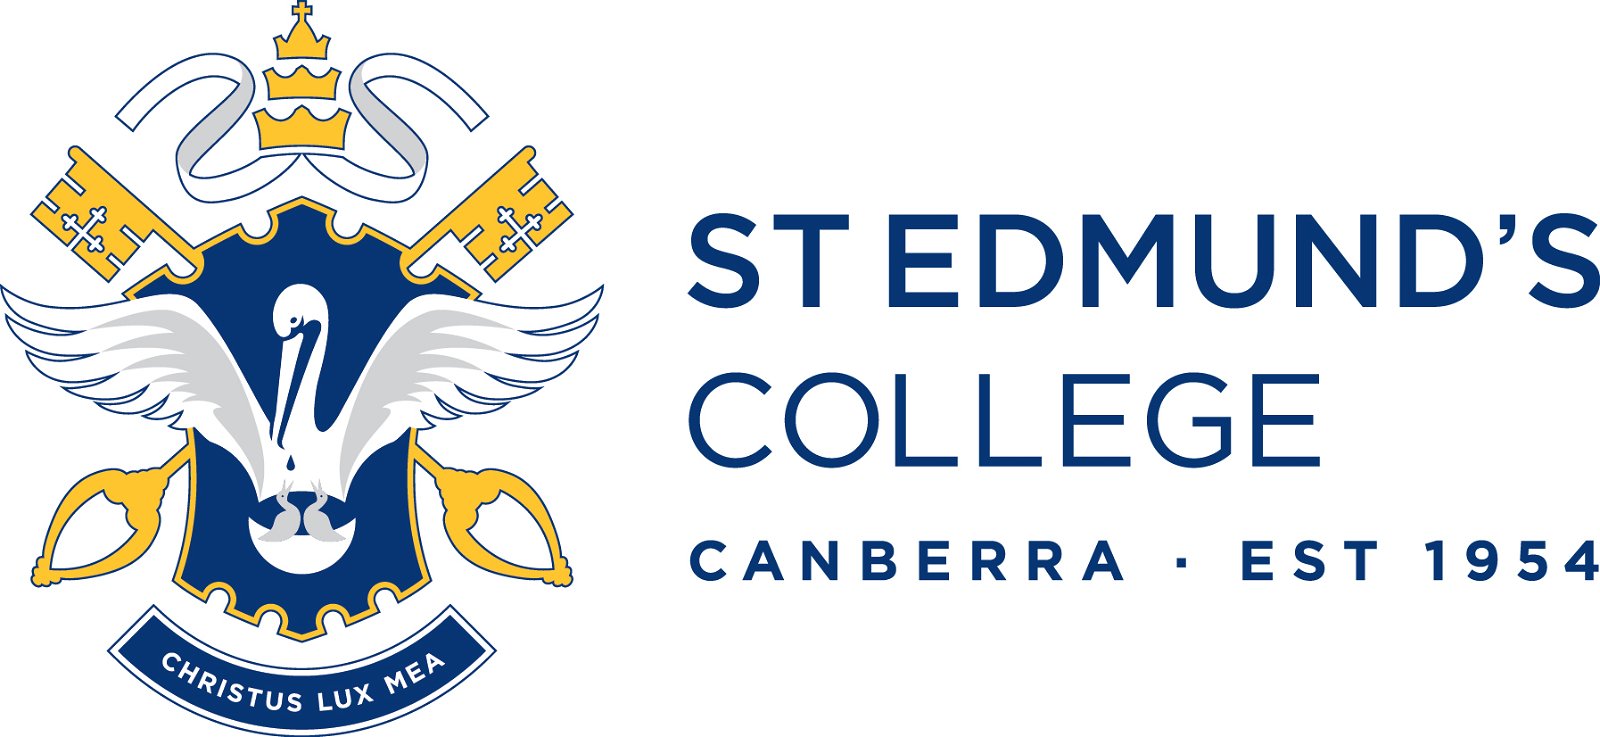 St Edmund's College Canberra - Melbourne School